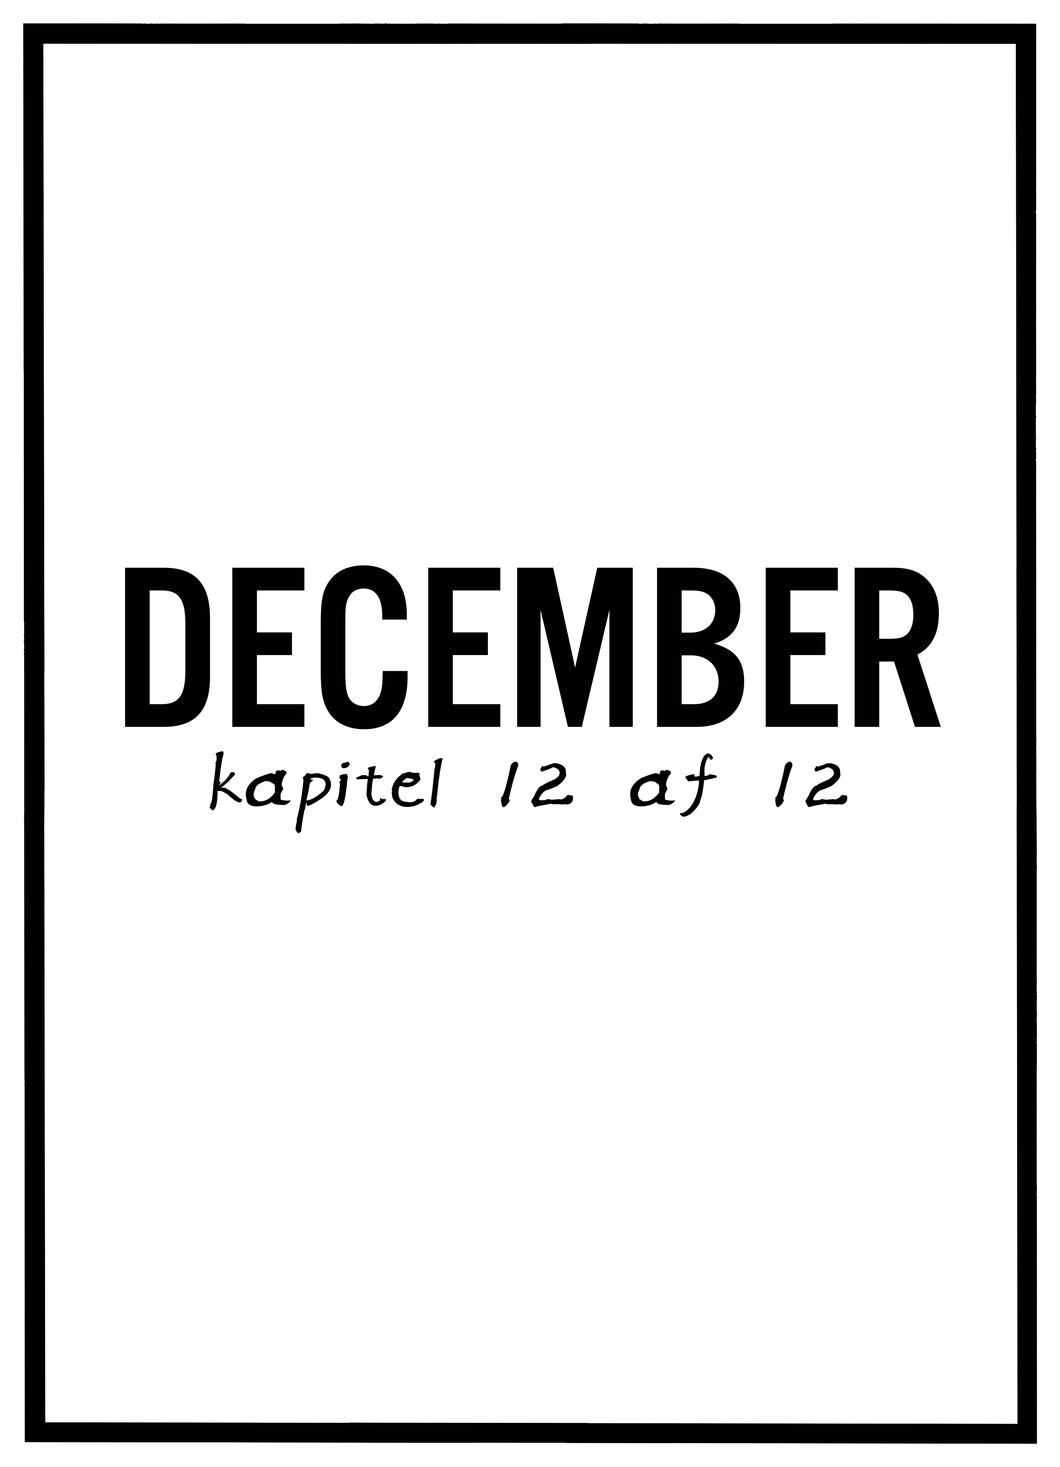 December - Plakat